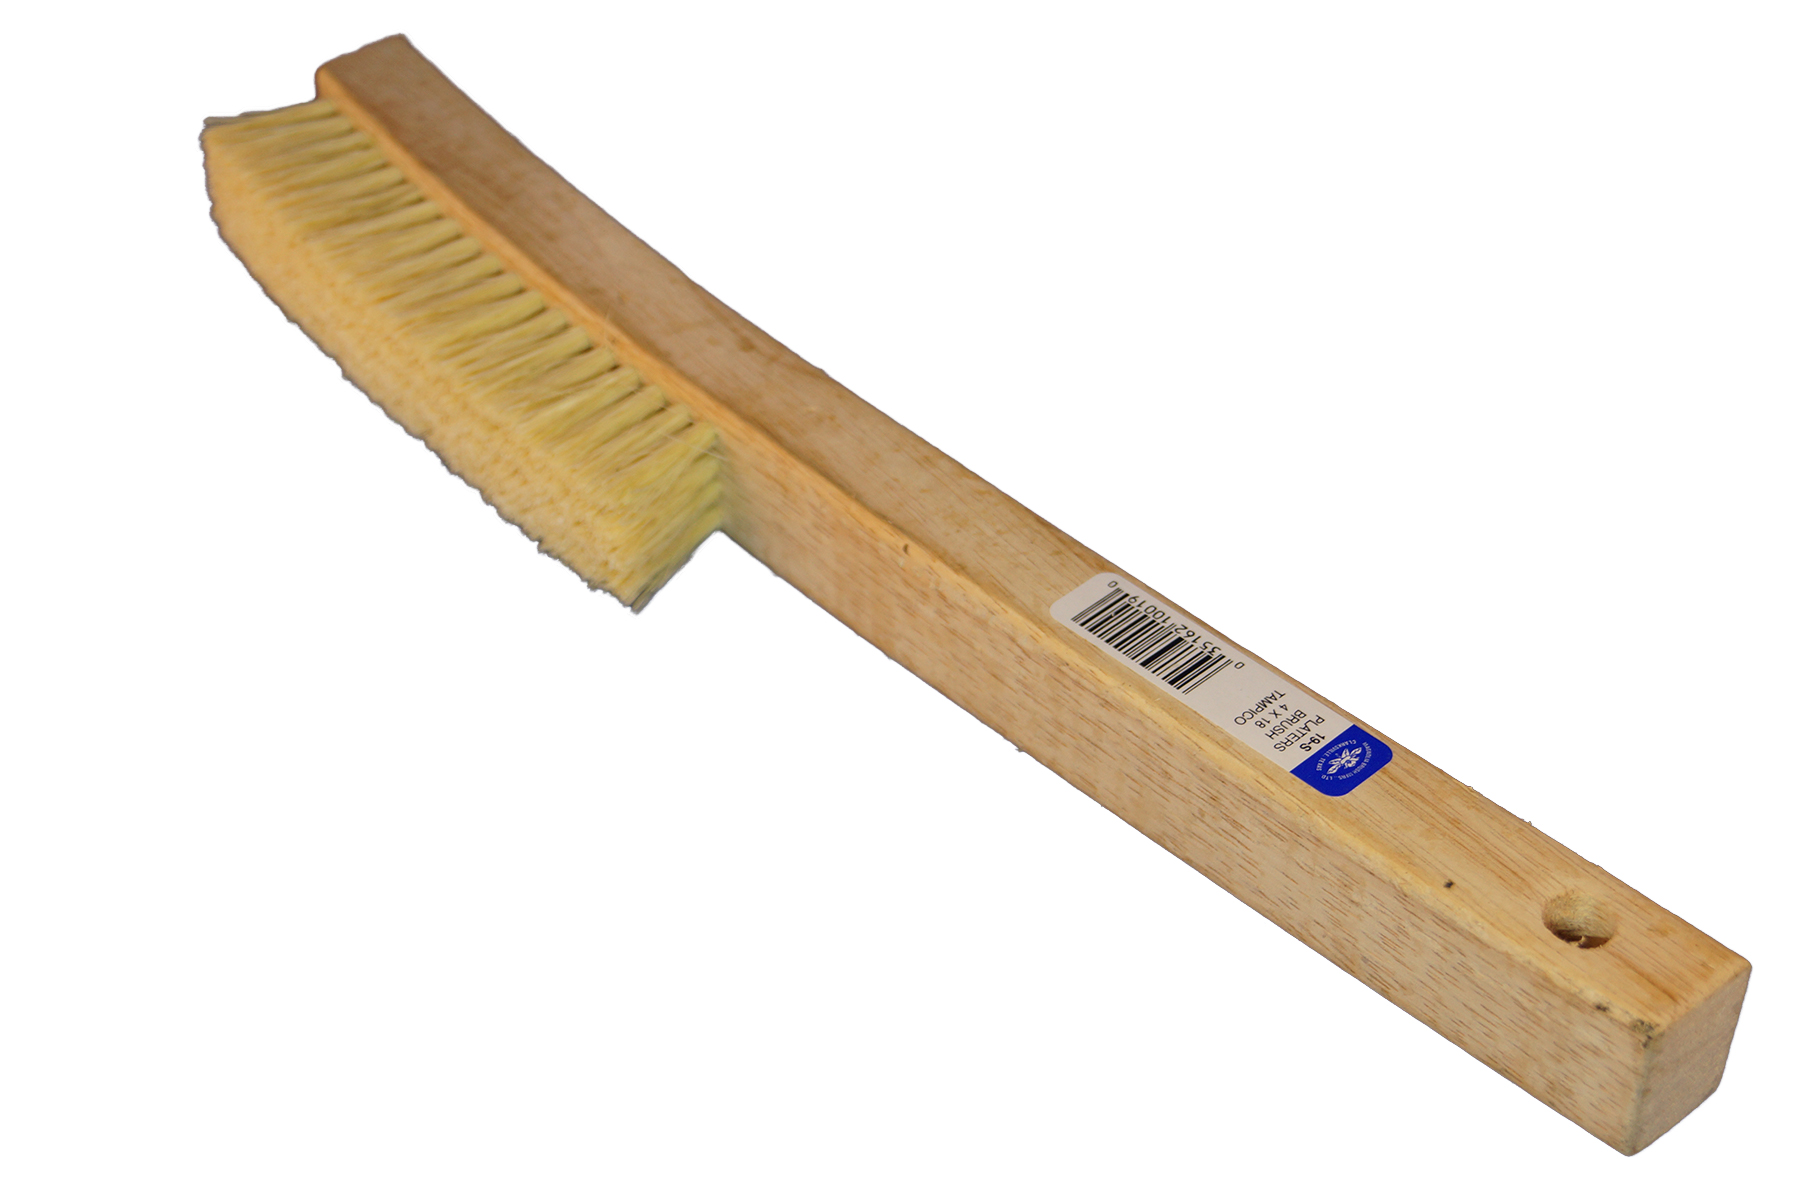 Swedish Long Handle Dishbrush - Stiff Tampico Bristles - The Foundry Home  Goods